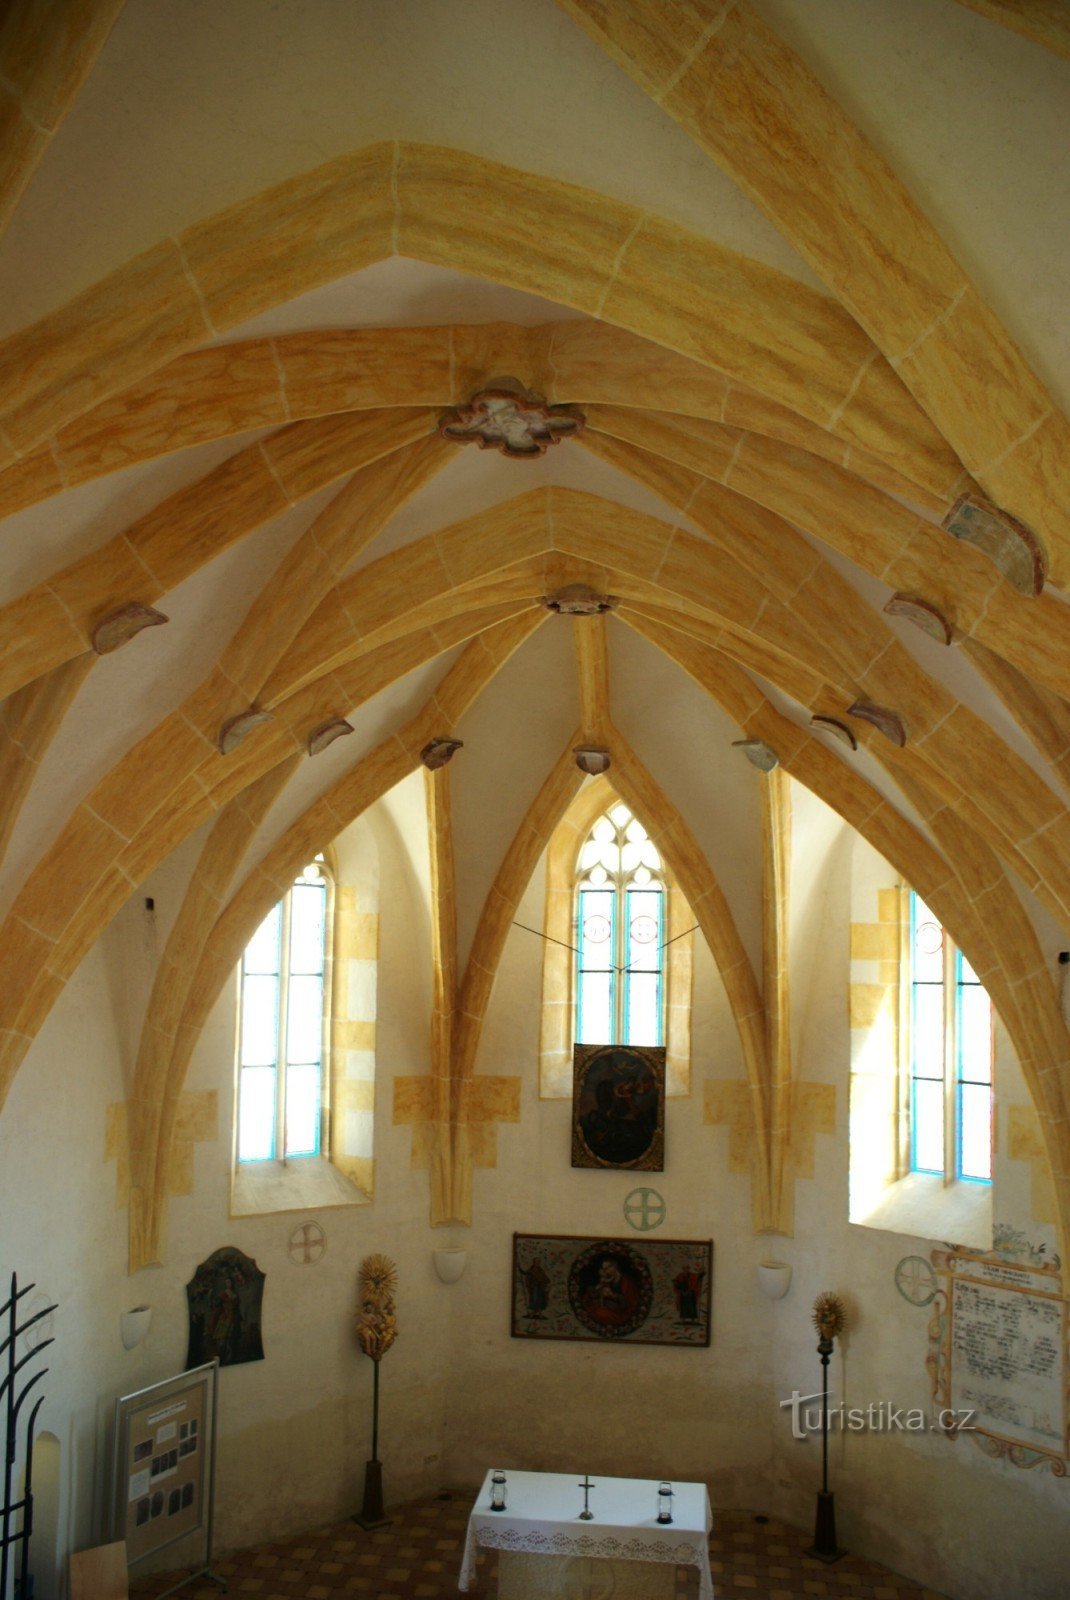 Litovel – Joyas góticas en la capilla de St. Jorge